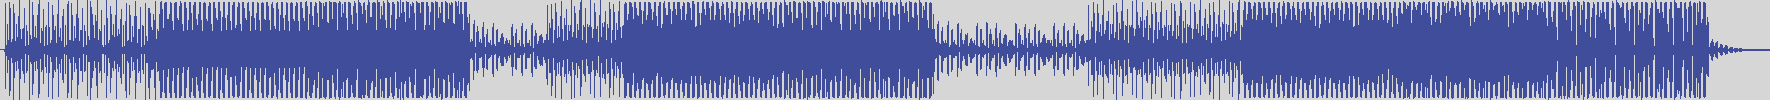 nf_boyz_records [NFY075] Koompa - Skaleta [Original Mix] audio wave form